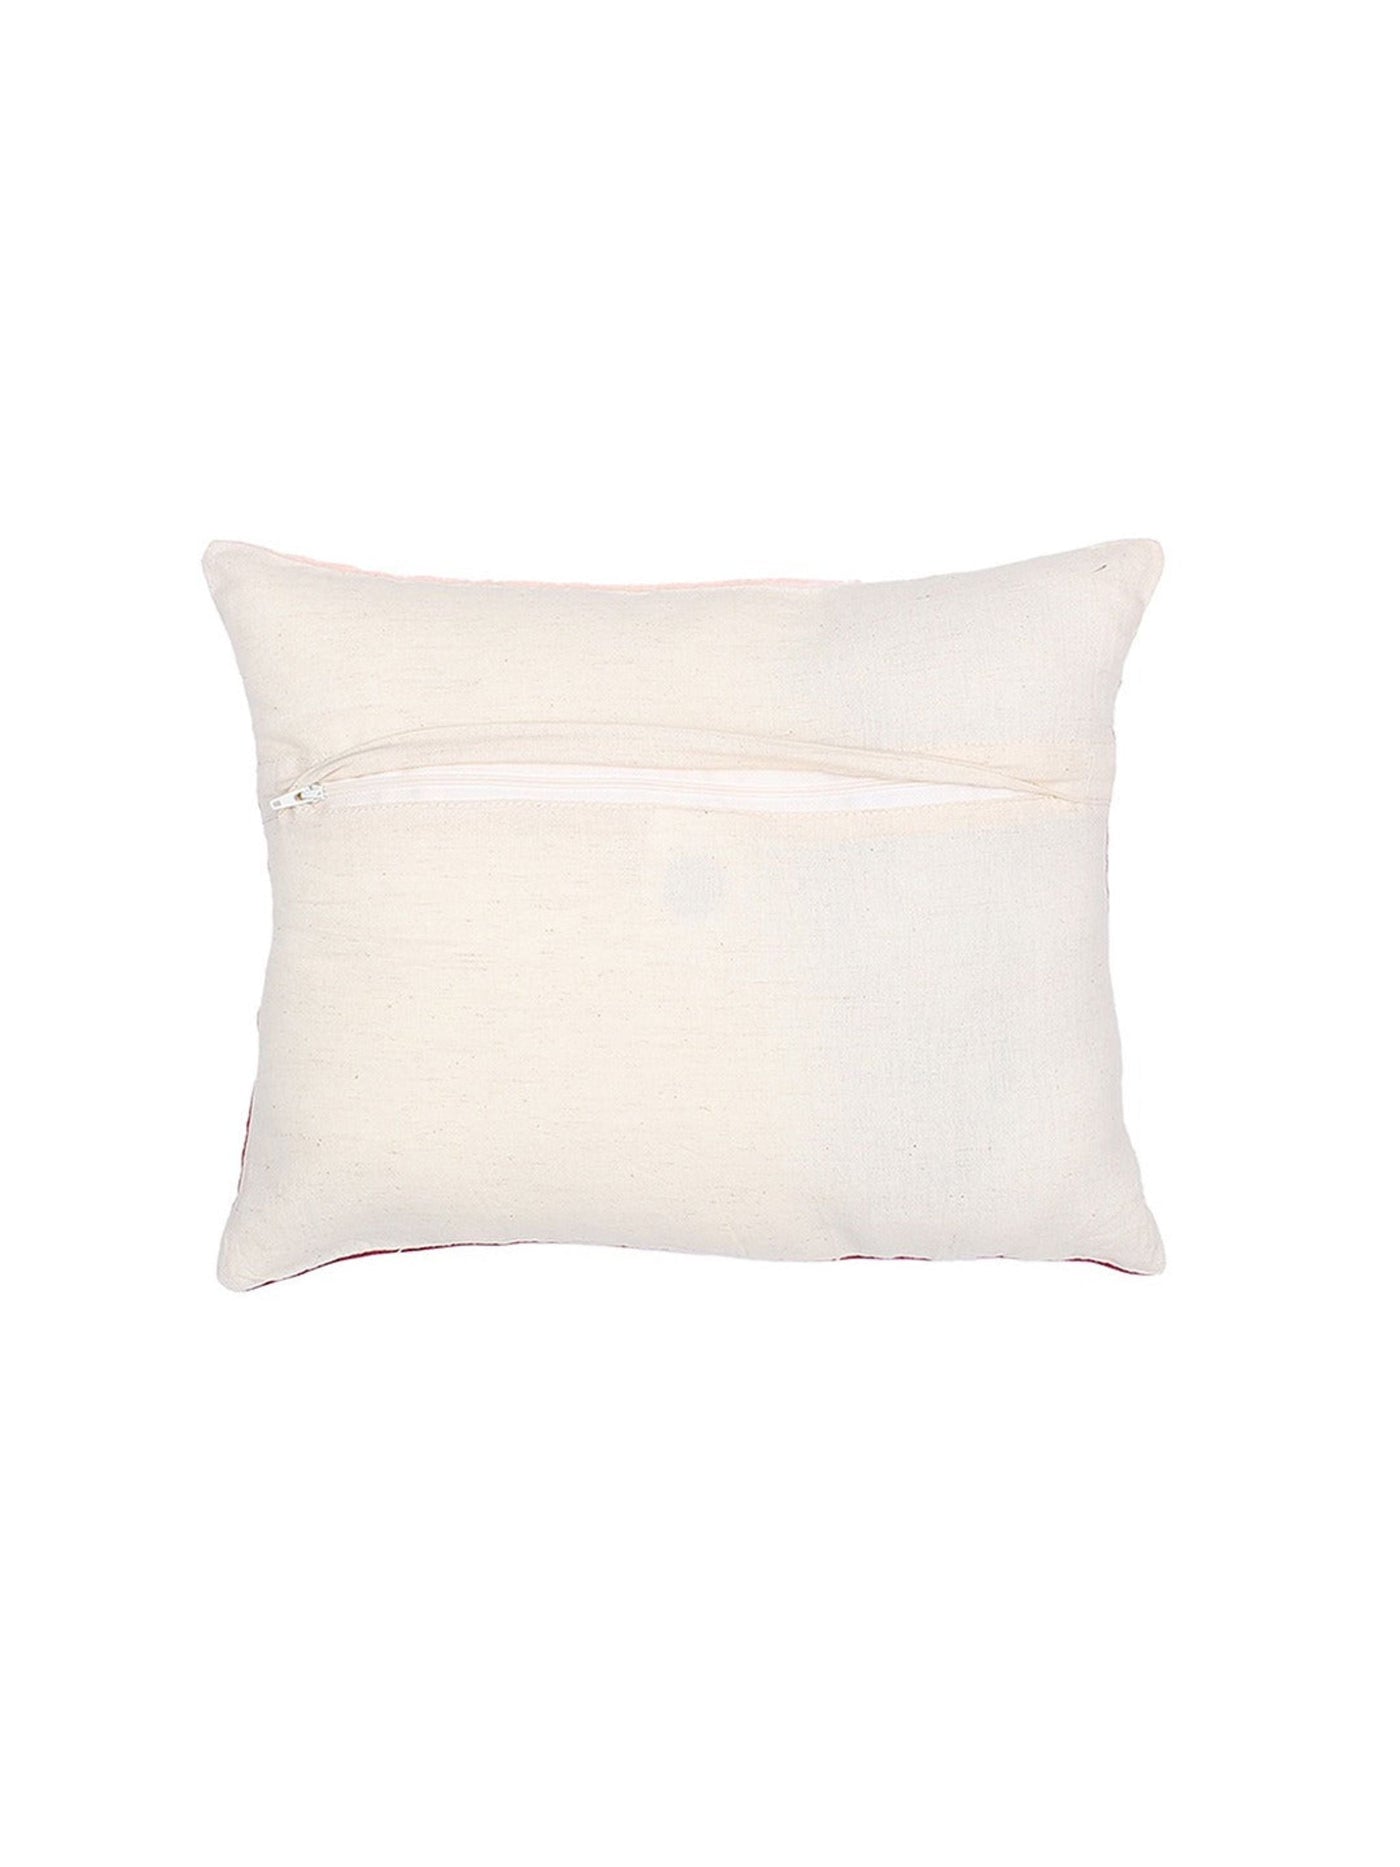 Cushion Cover - The Dipdye Ruby Cotton Viscos 2 s-Orange-8903773001088